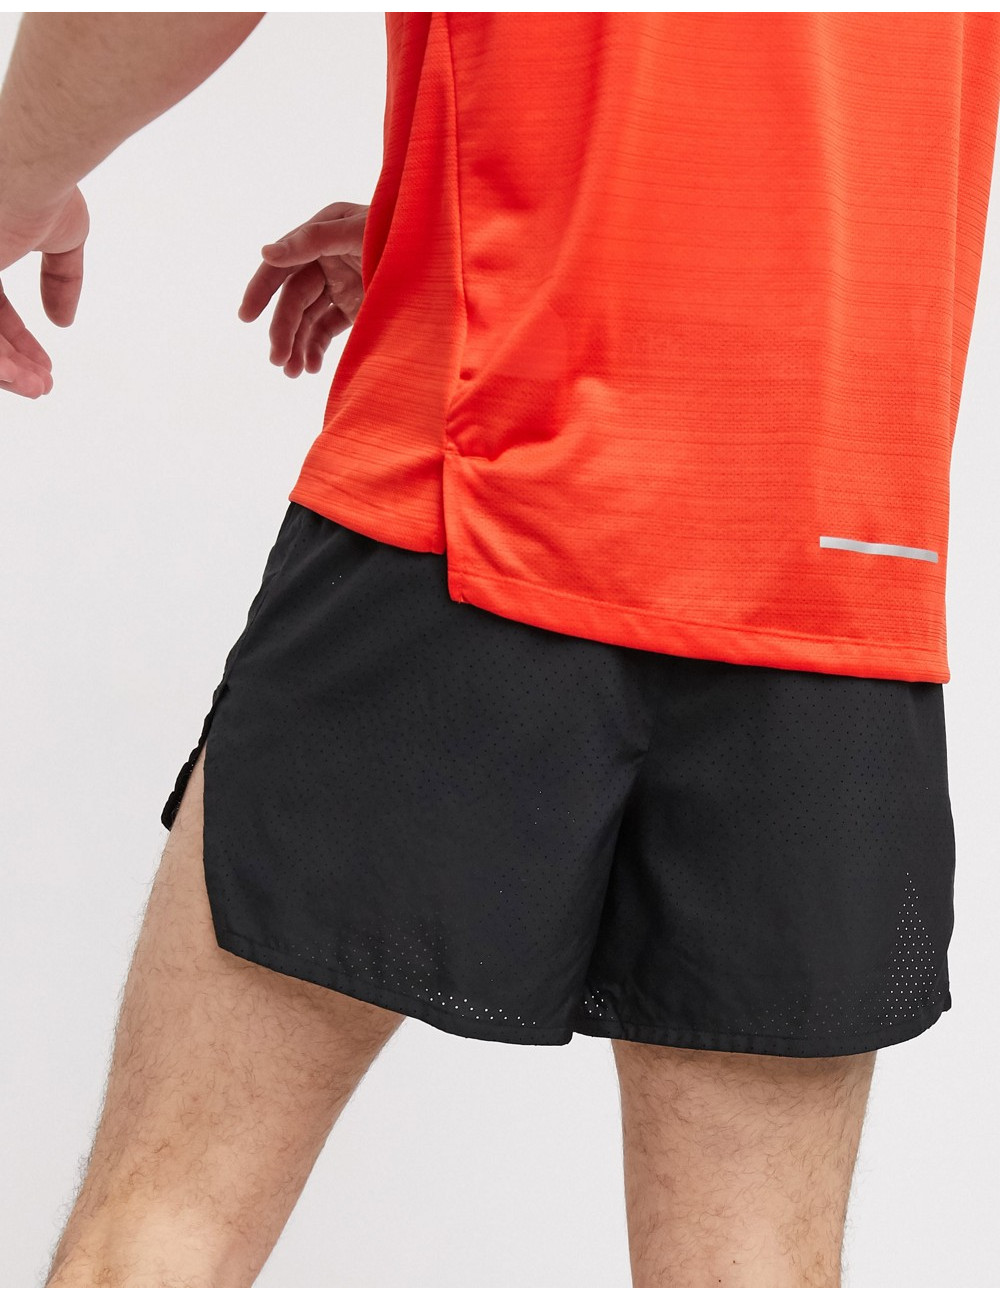 Nike Running Fast shorts in...